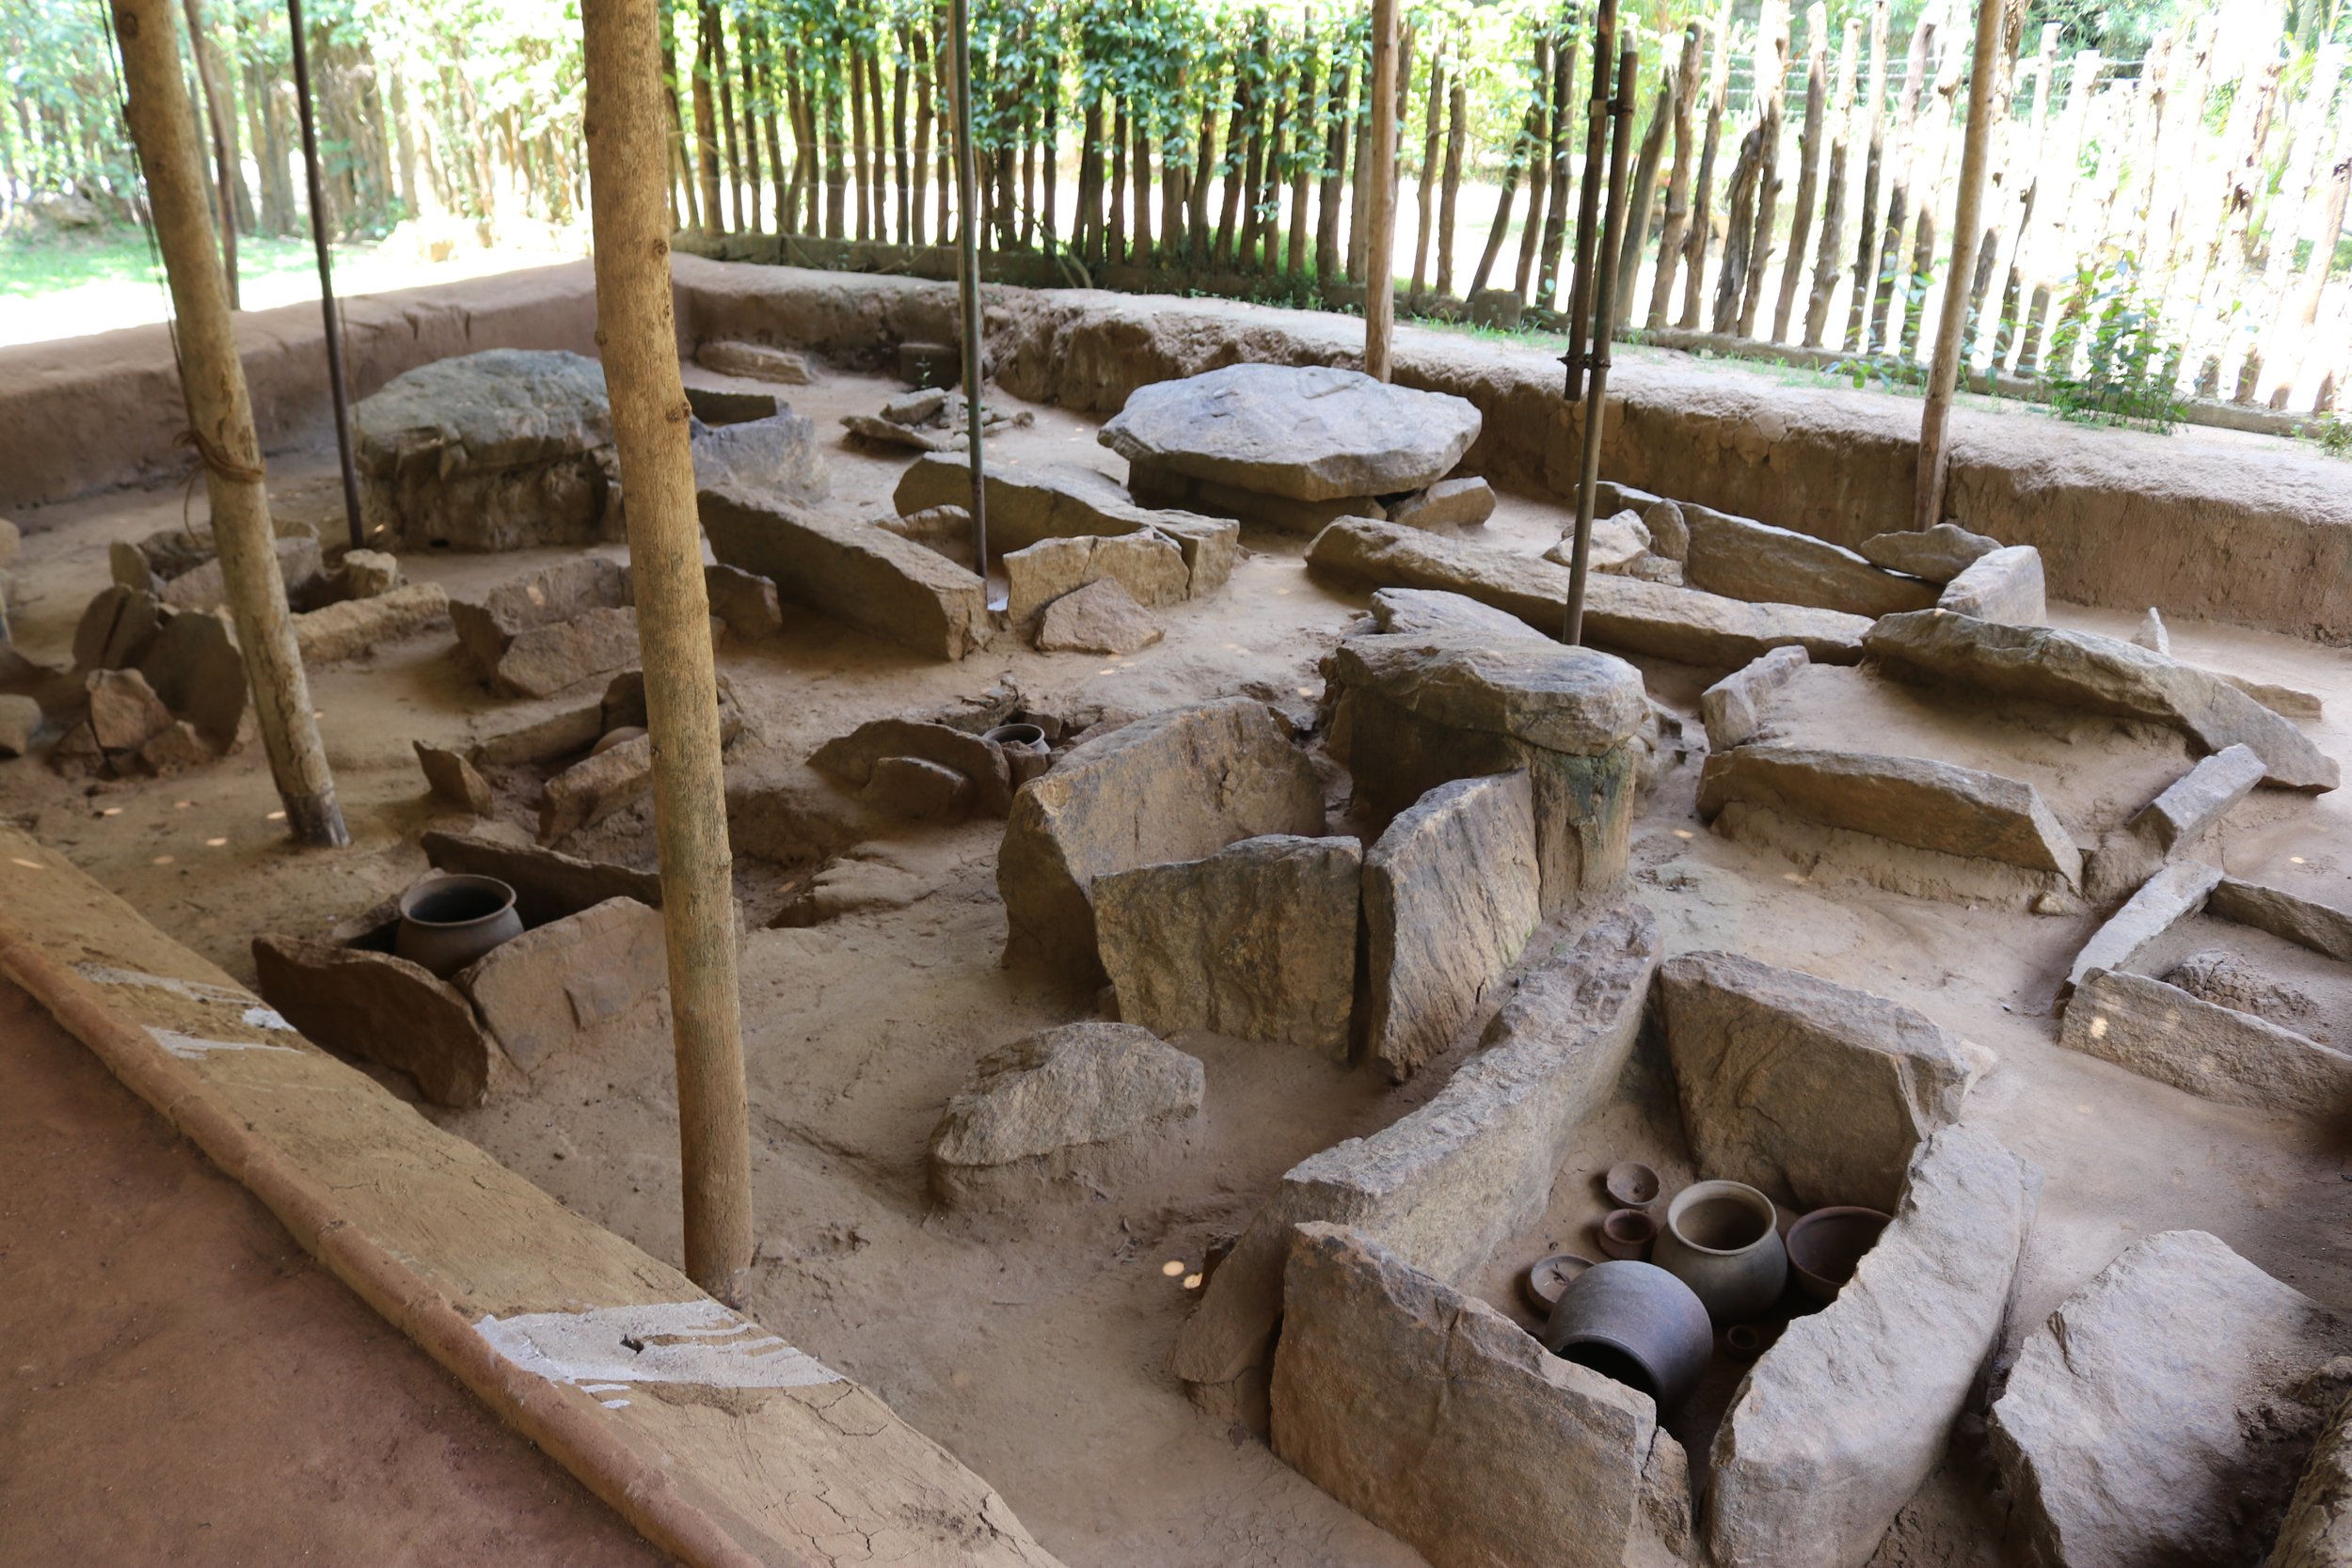 Ibbankatuwa Megalithic Tombs